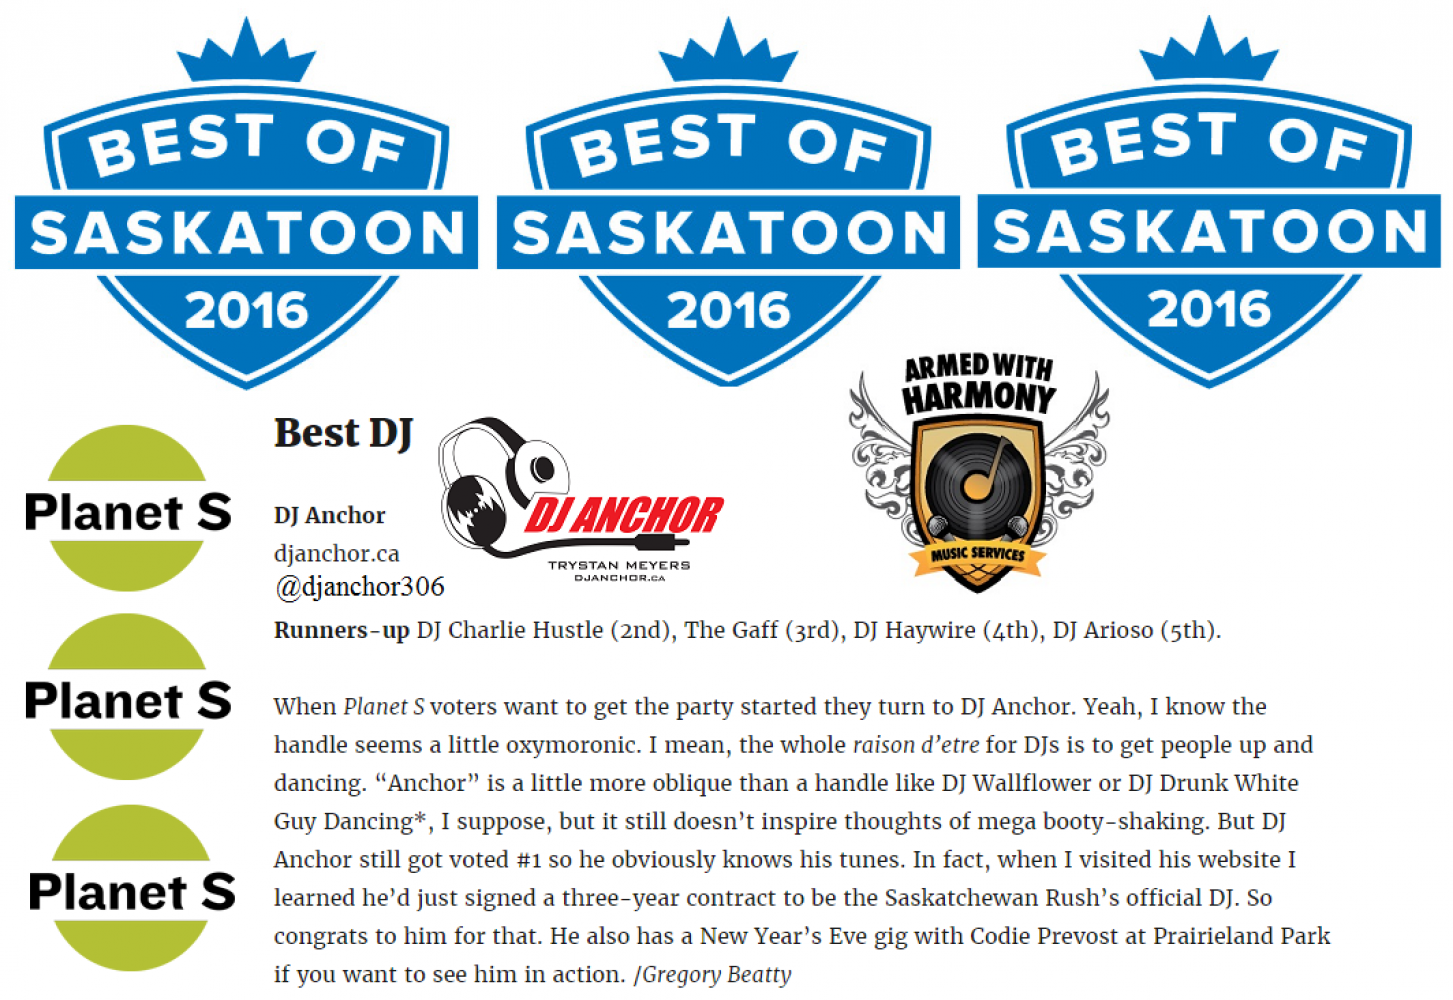 3 Armed With Harmony DJs, Dj Anchor, Dj Haywire, Arioso Voted As "Best Saskatoon DJ" By Planet S Magazine